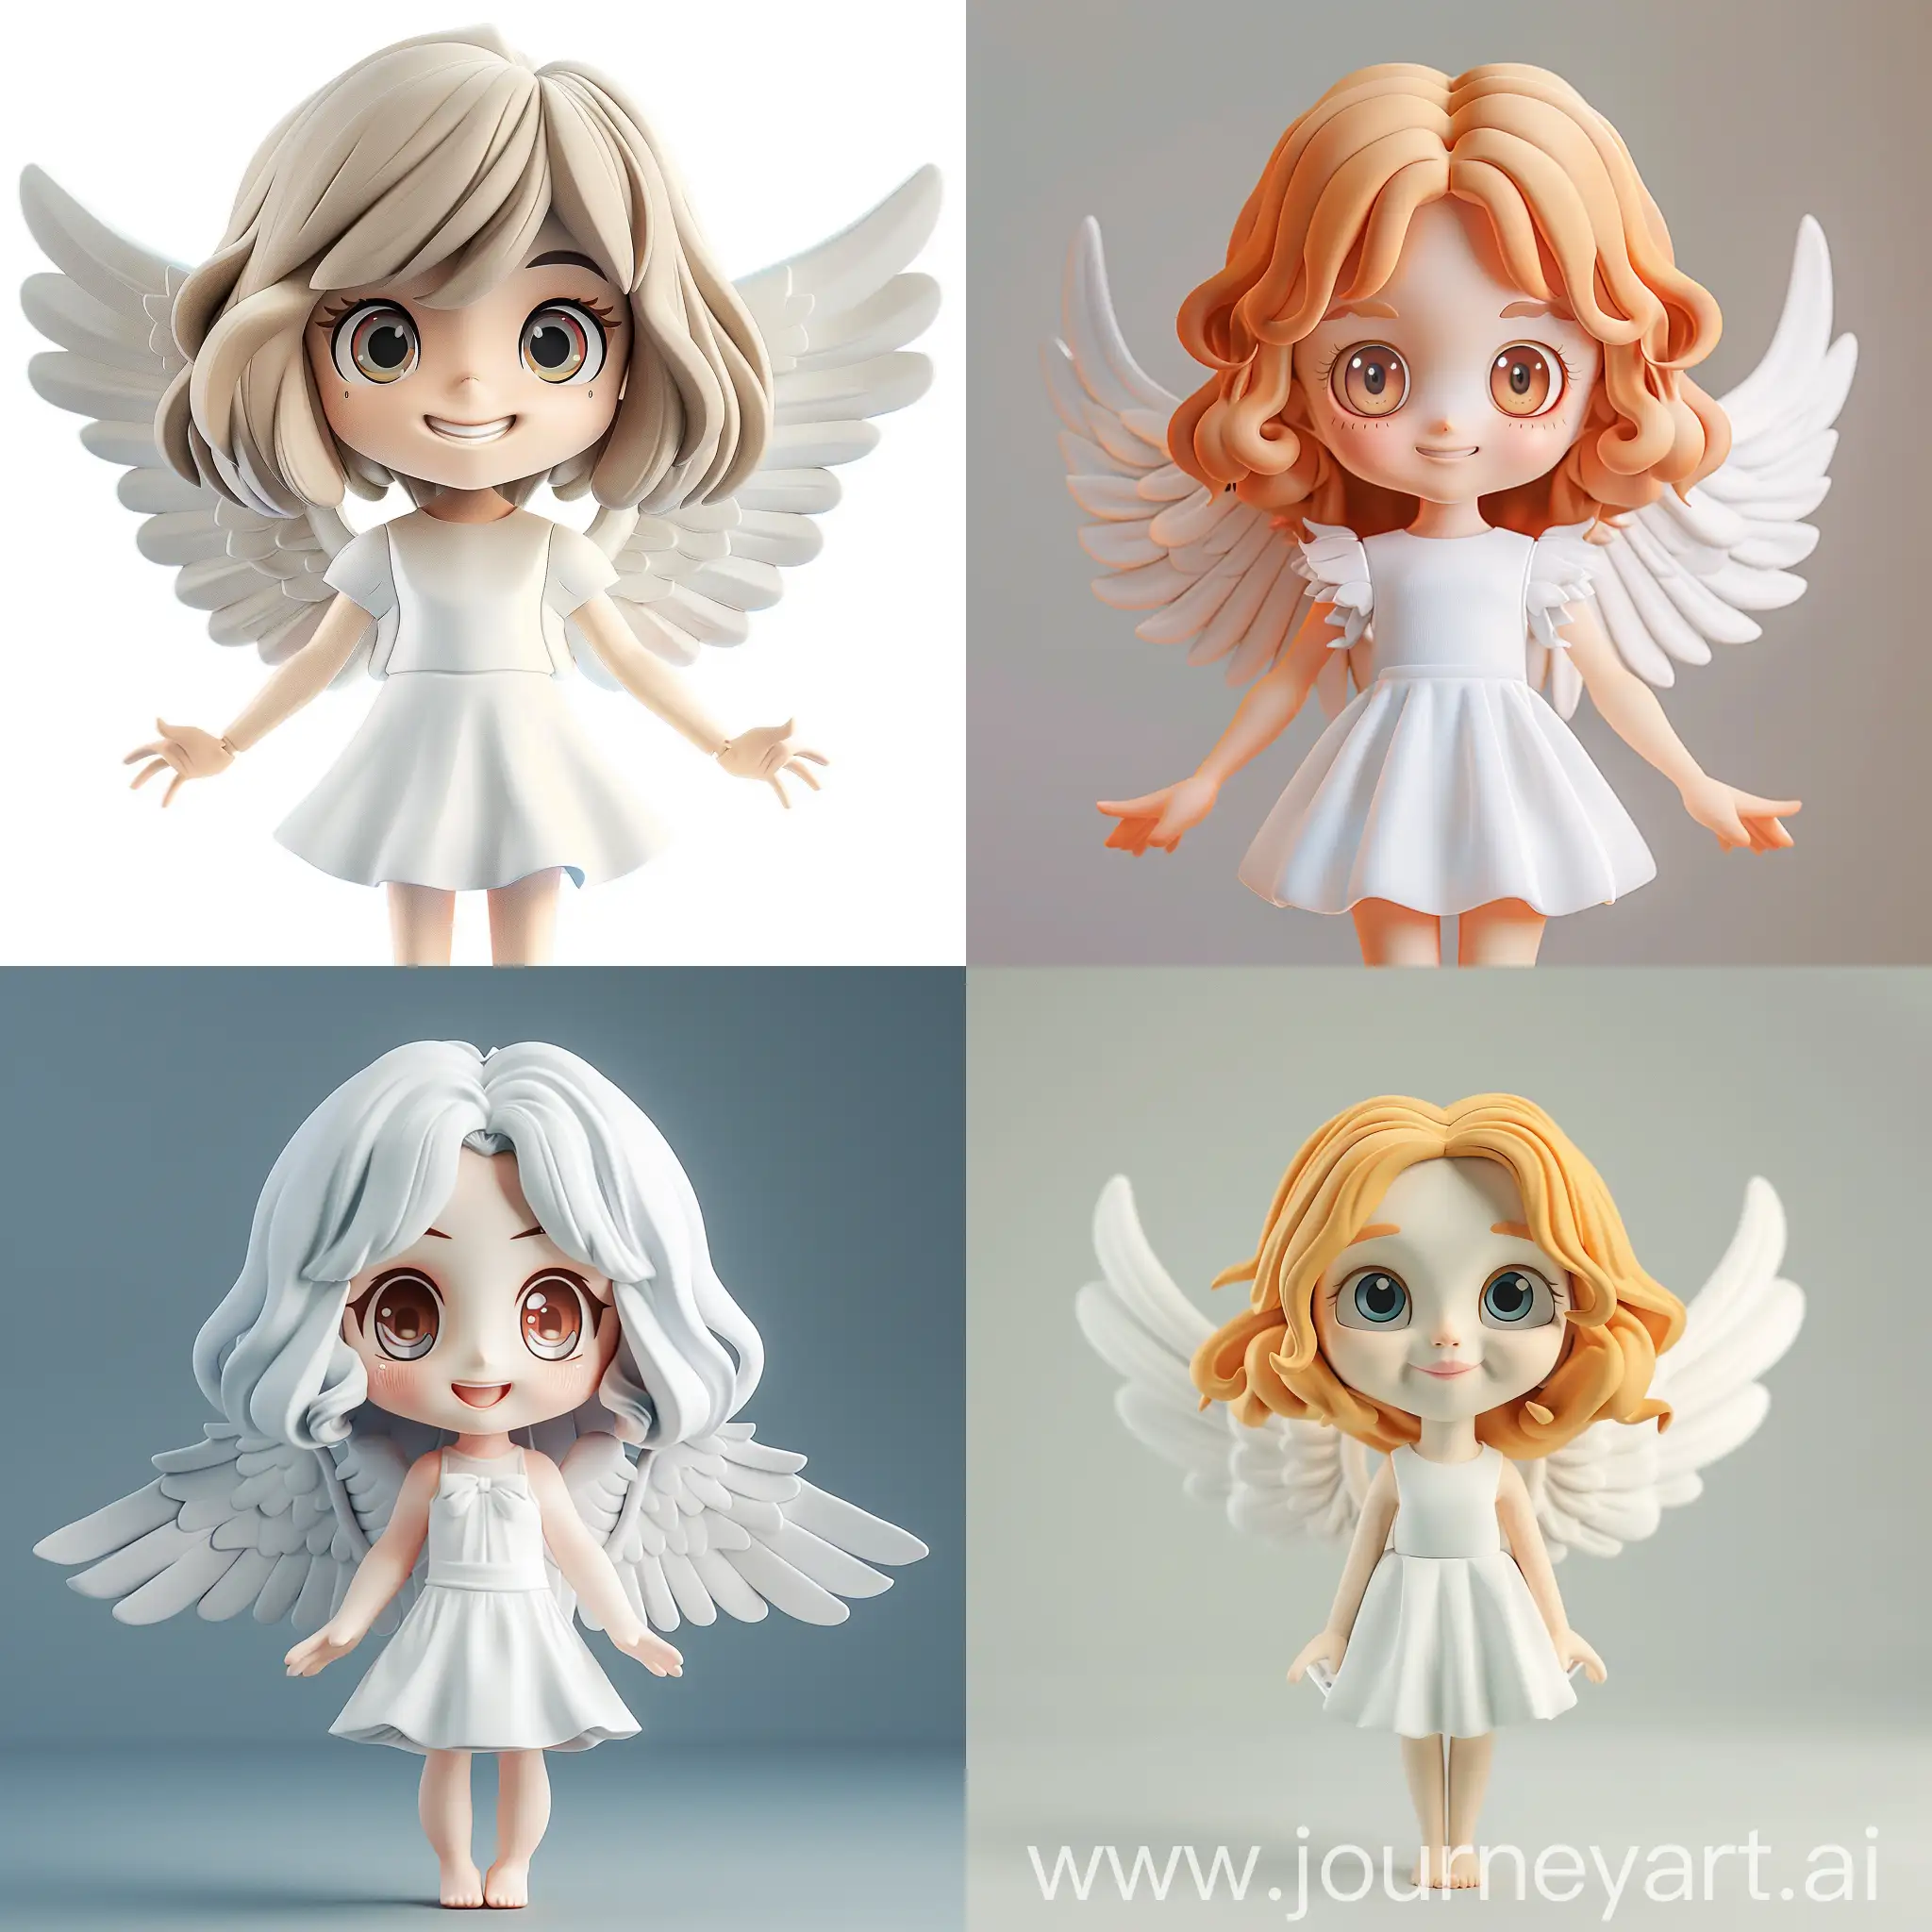 Joyful-Angel-Girl-with-Bright-Eyes-Surrounded-by-Blind-Box-Toys